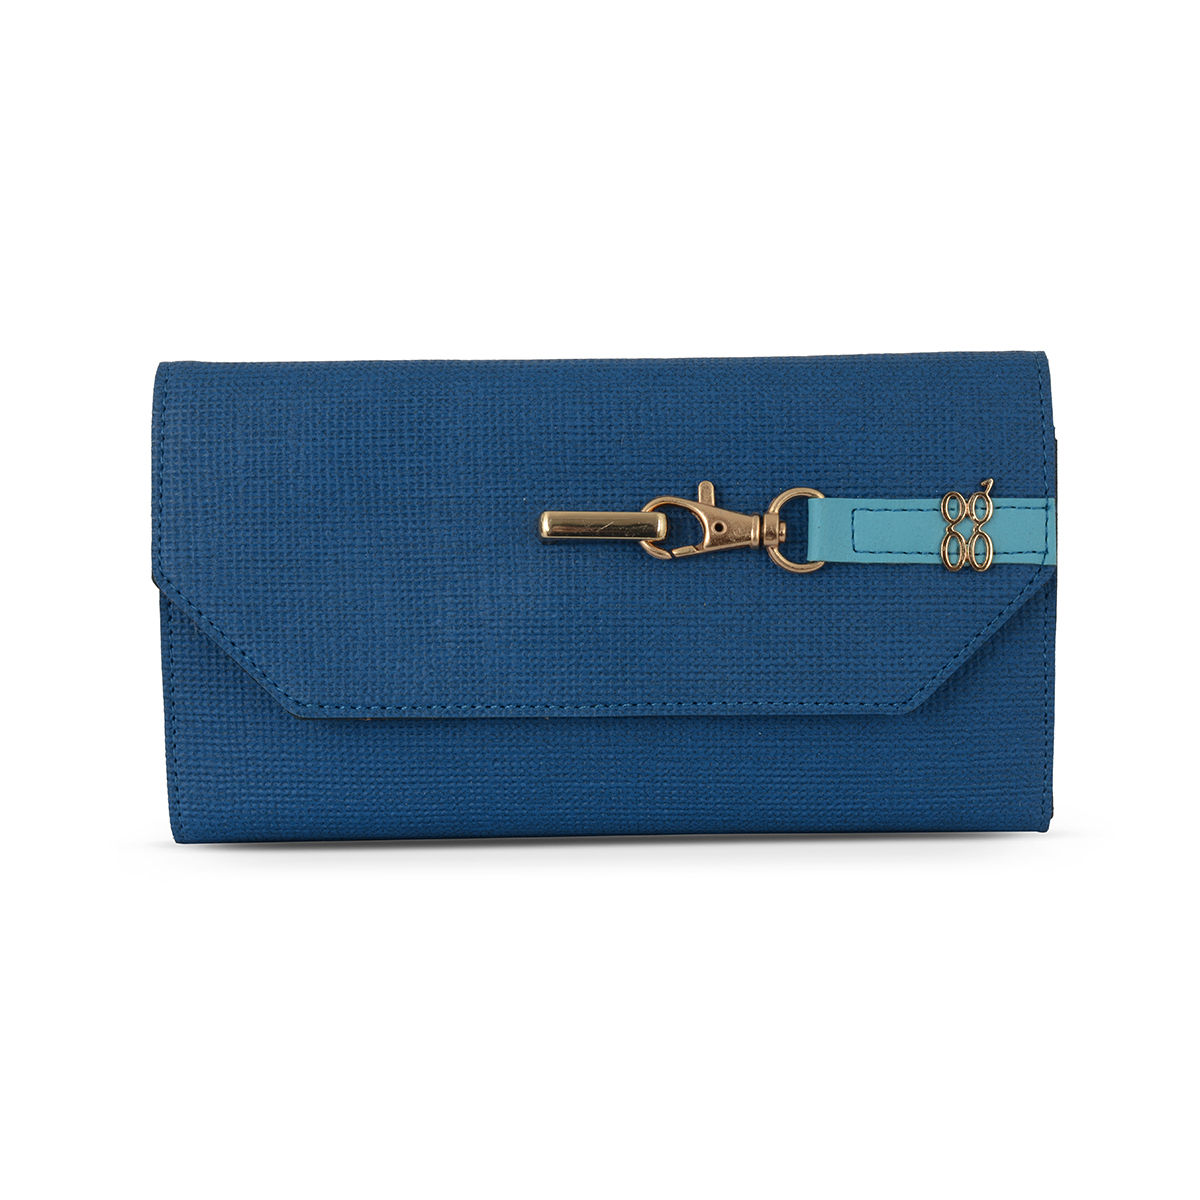 Women's Blue Handbags, Bags & Purses | John Lewis & Partners